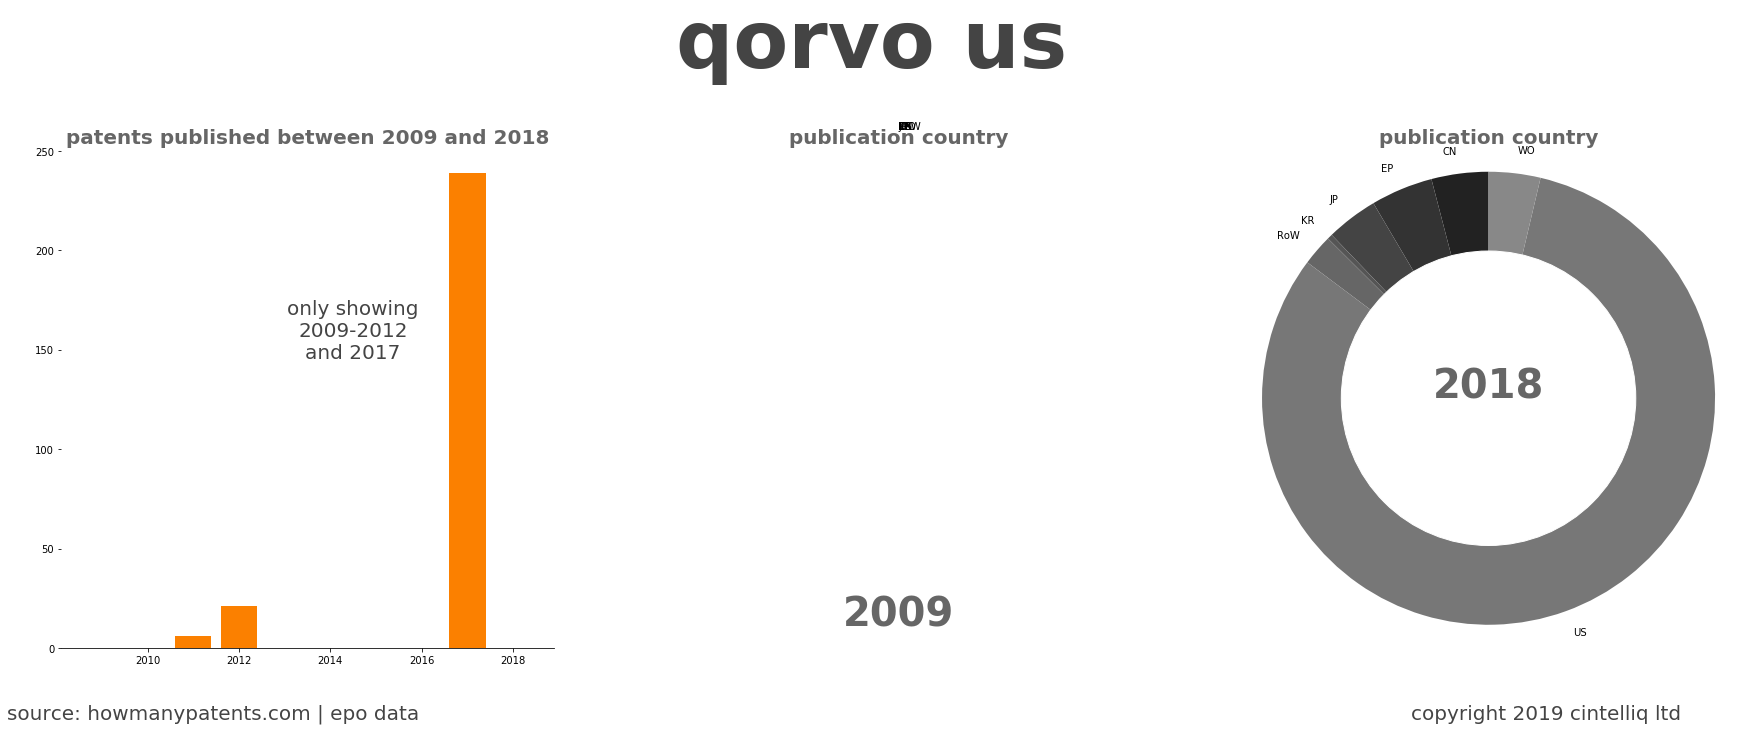 summary of patents for Qorvo Us